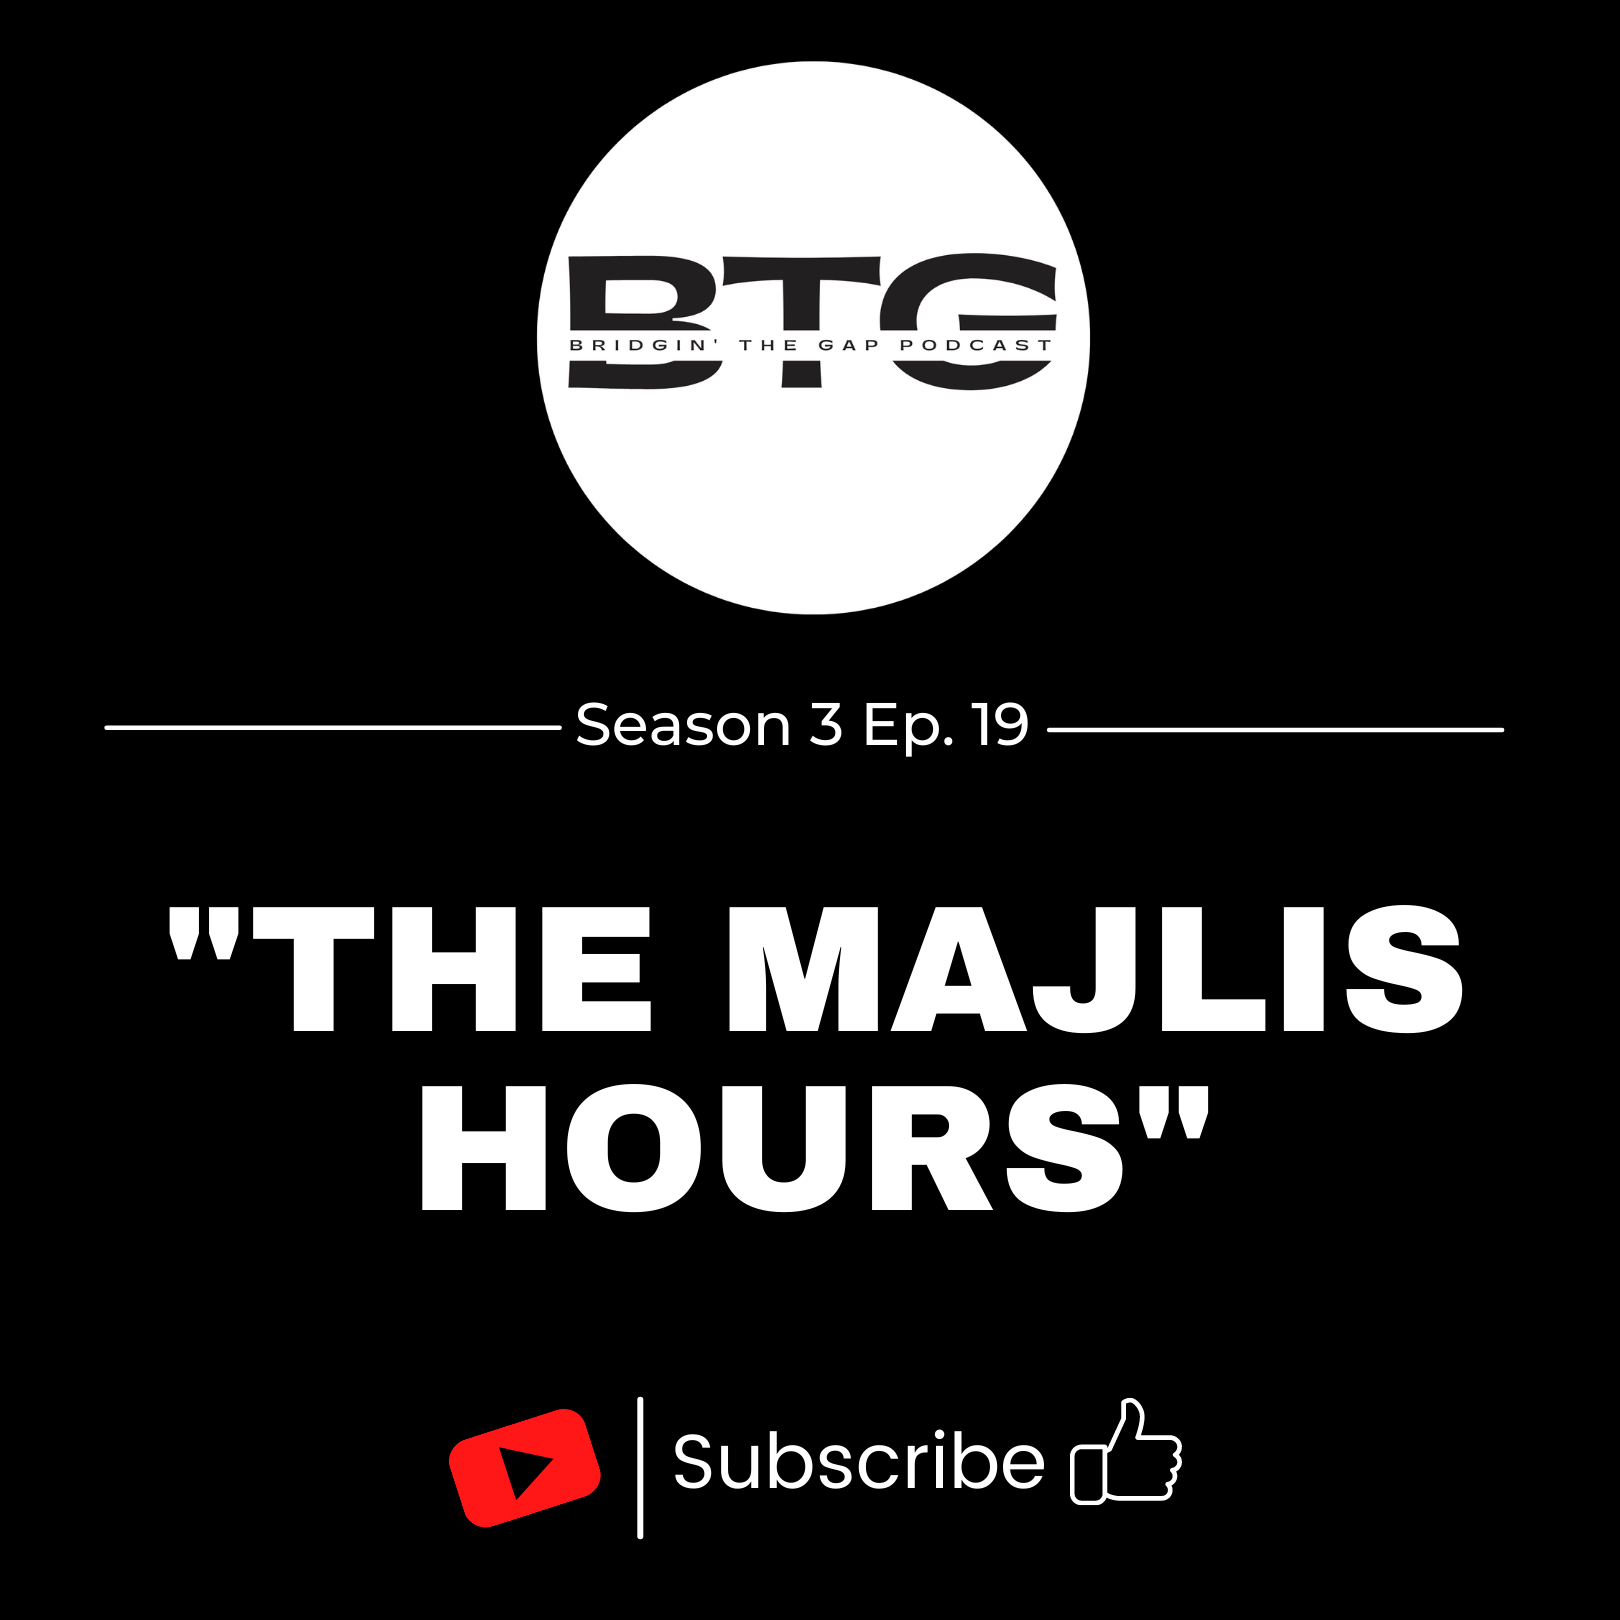 Bridgin' The Gap Podcast Season 3 Ep. 19 "The Majlis Hours"